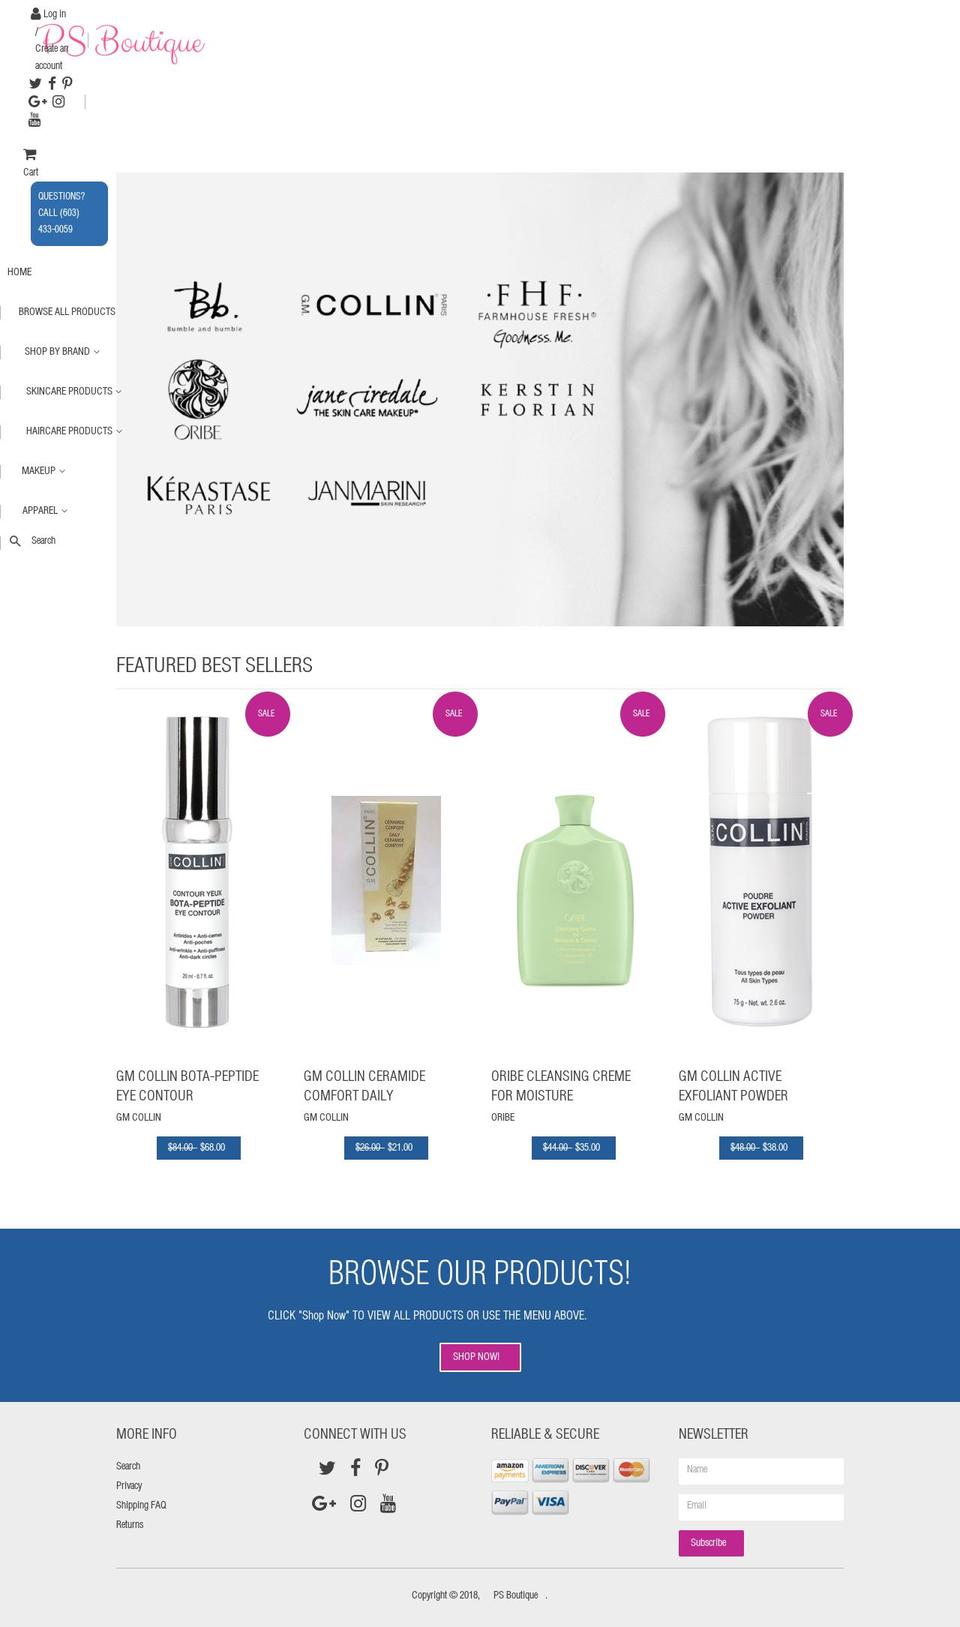 ps.boutique shopify website screenshot